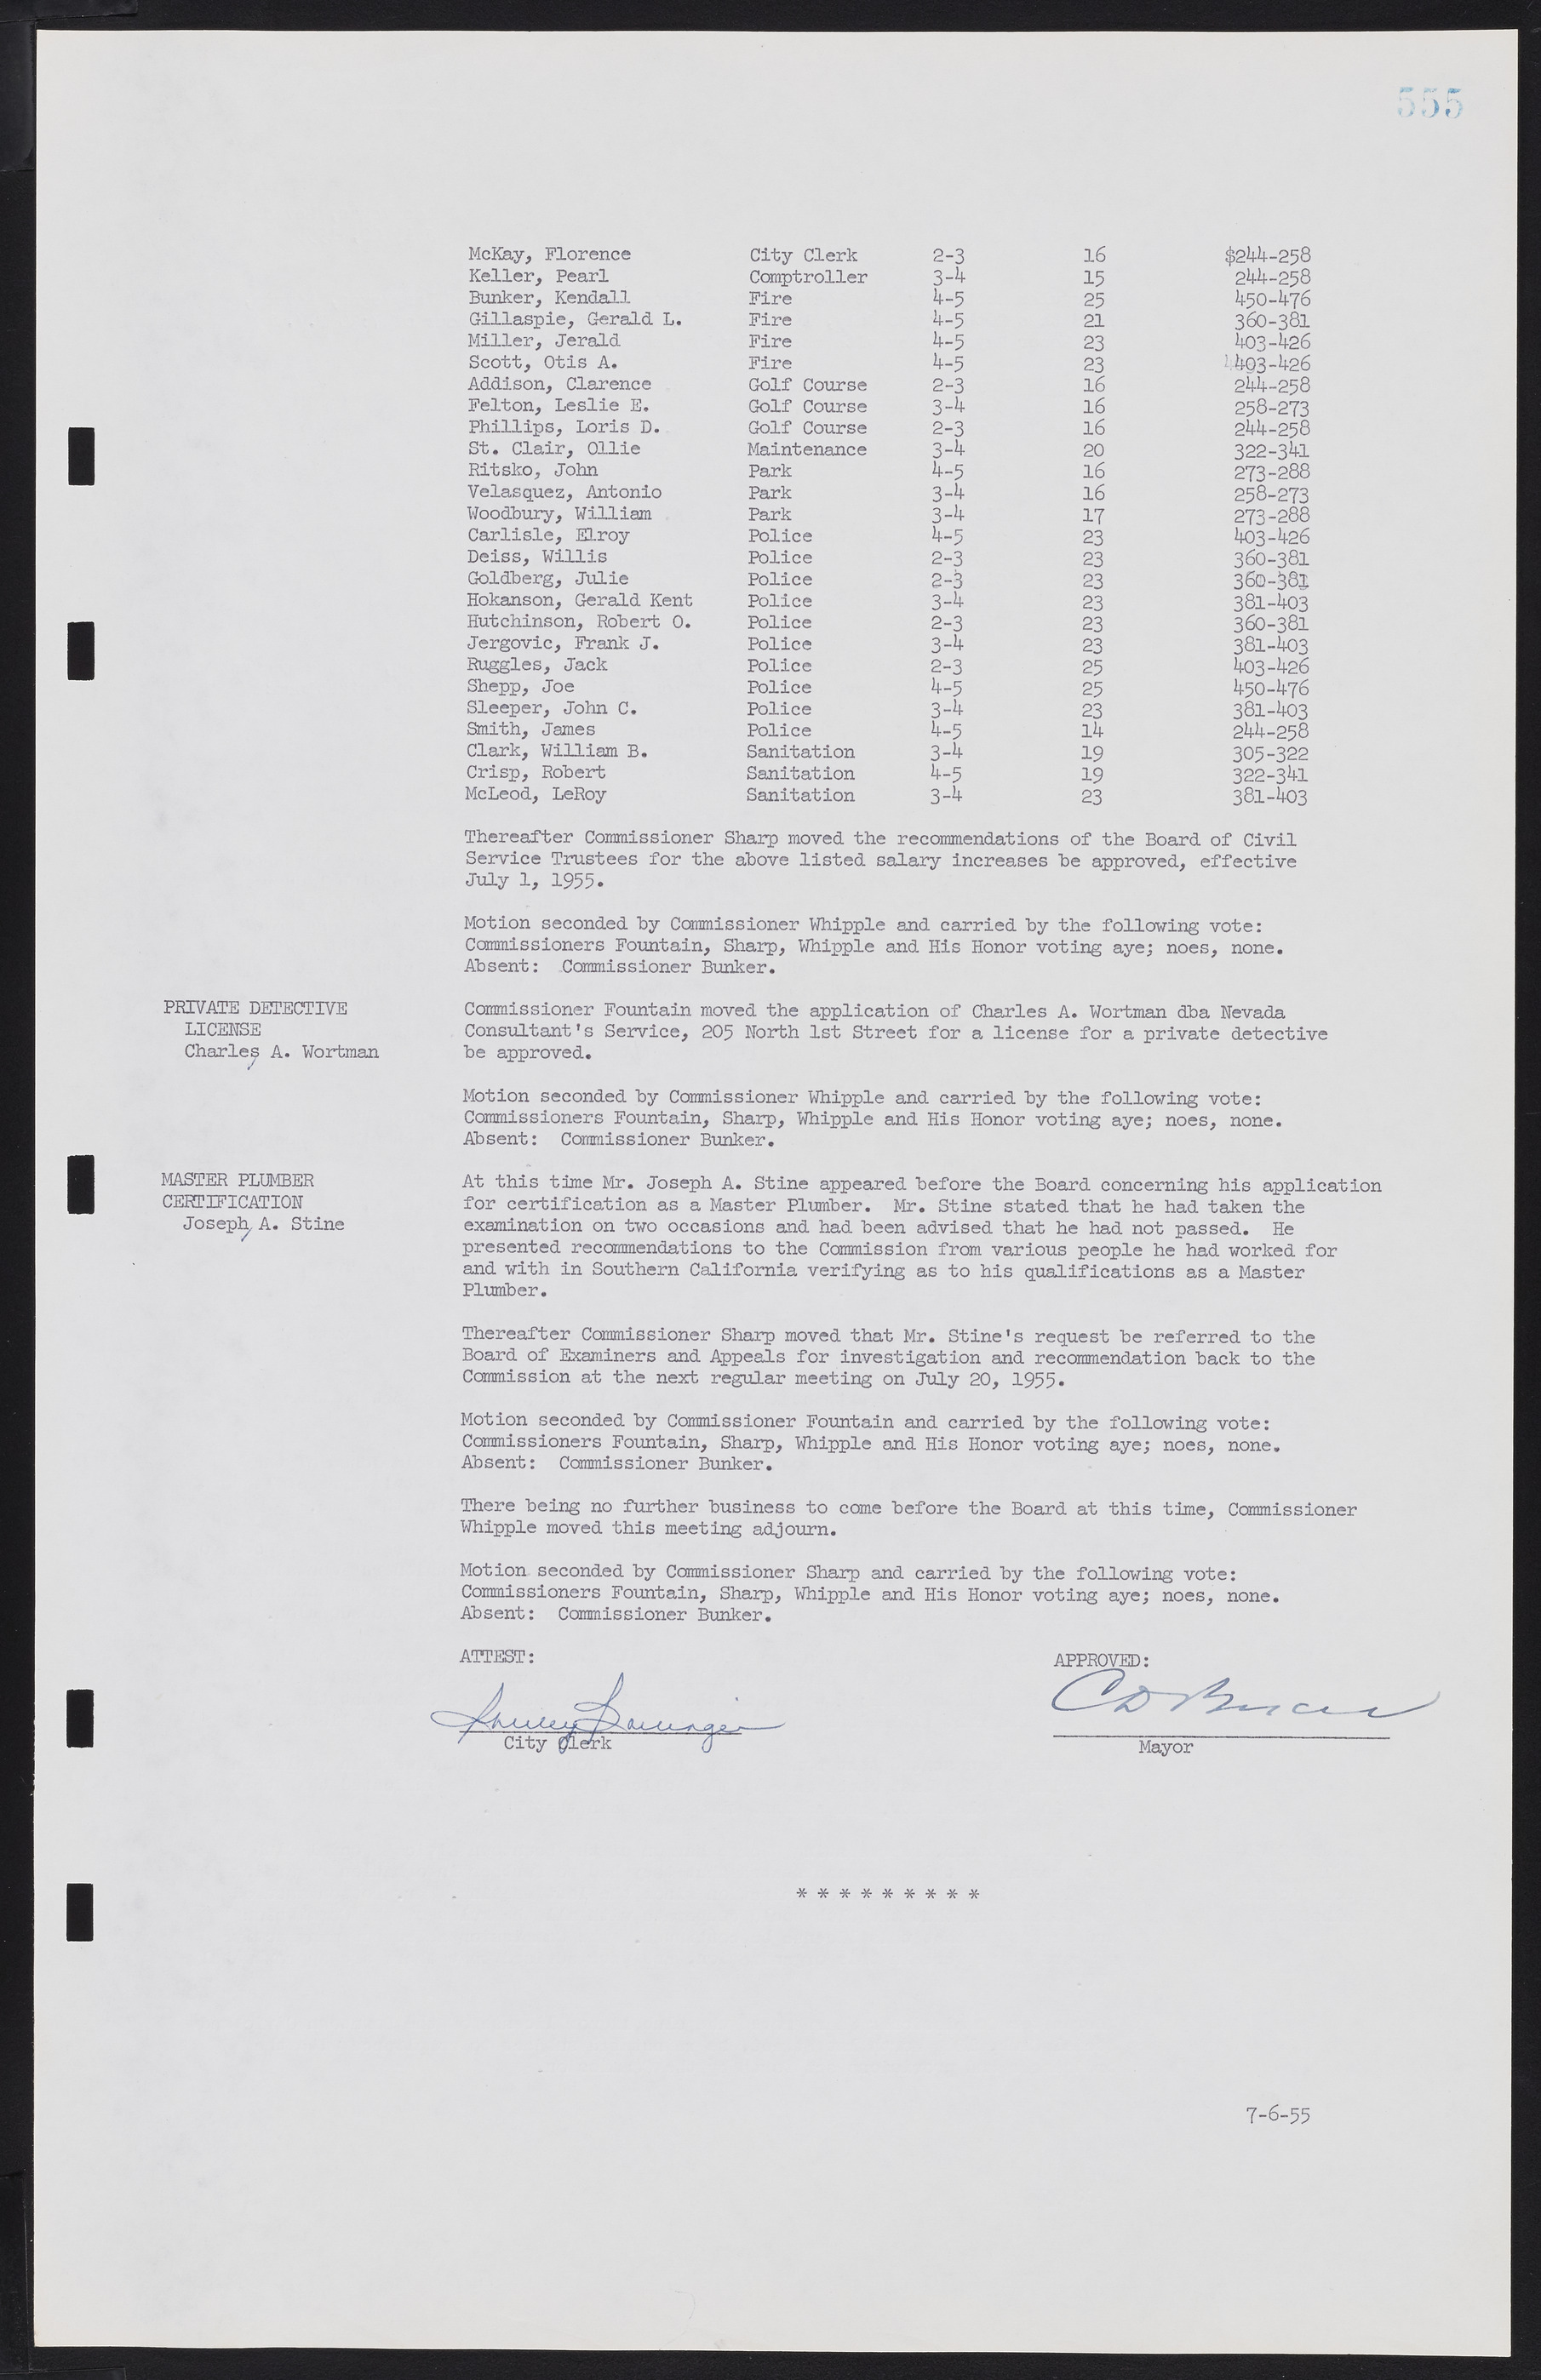 Las Vegas City Commission Minutes, February 17, 1954 to September 21, 1955, lvc000009-561